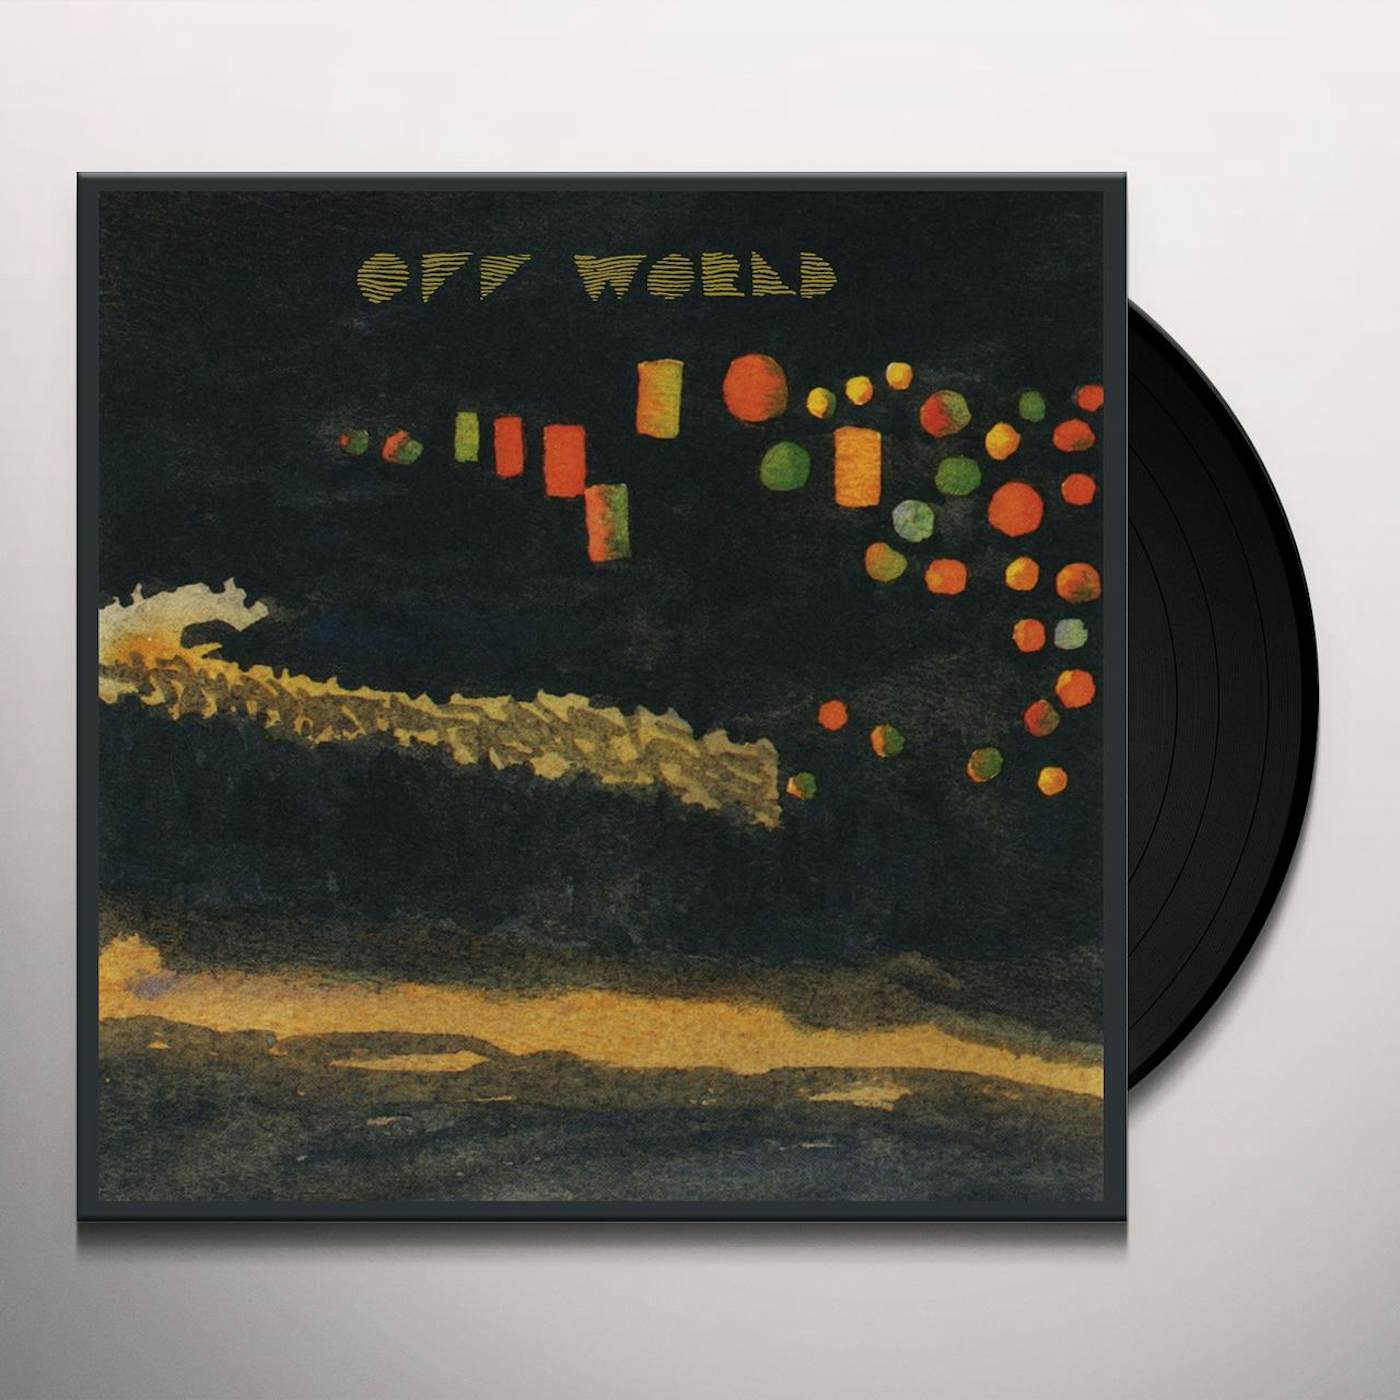 Off World 2 Vinyl Record